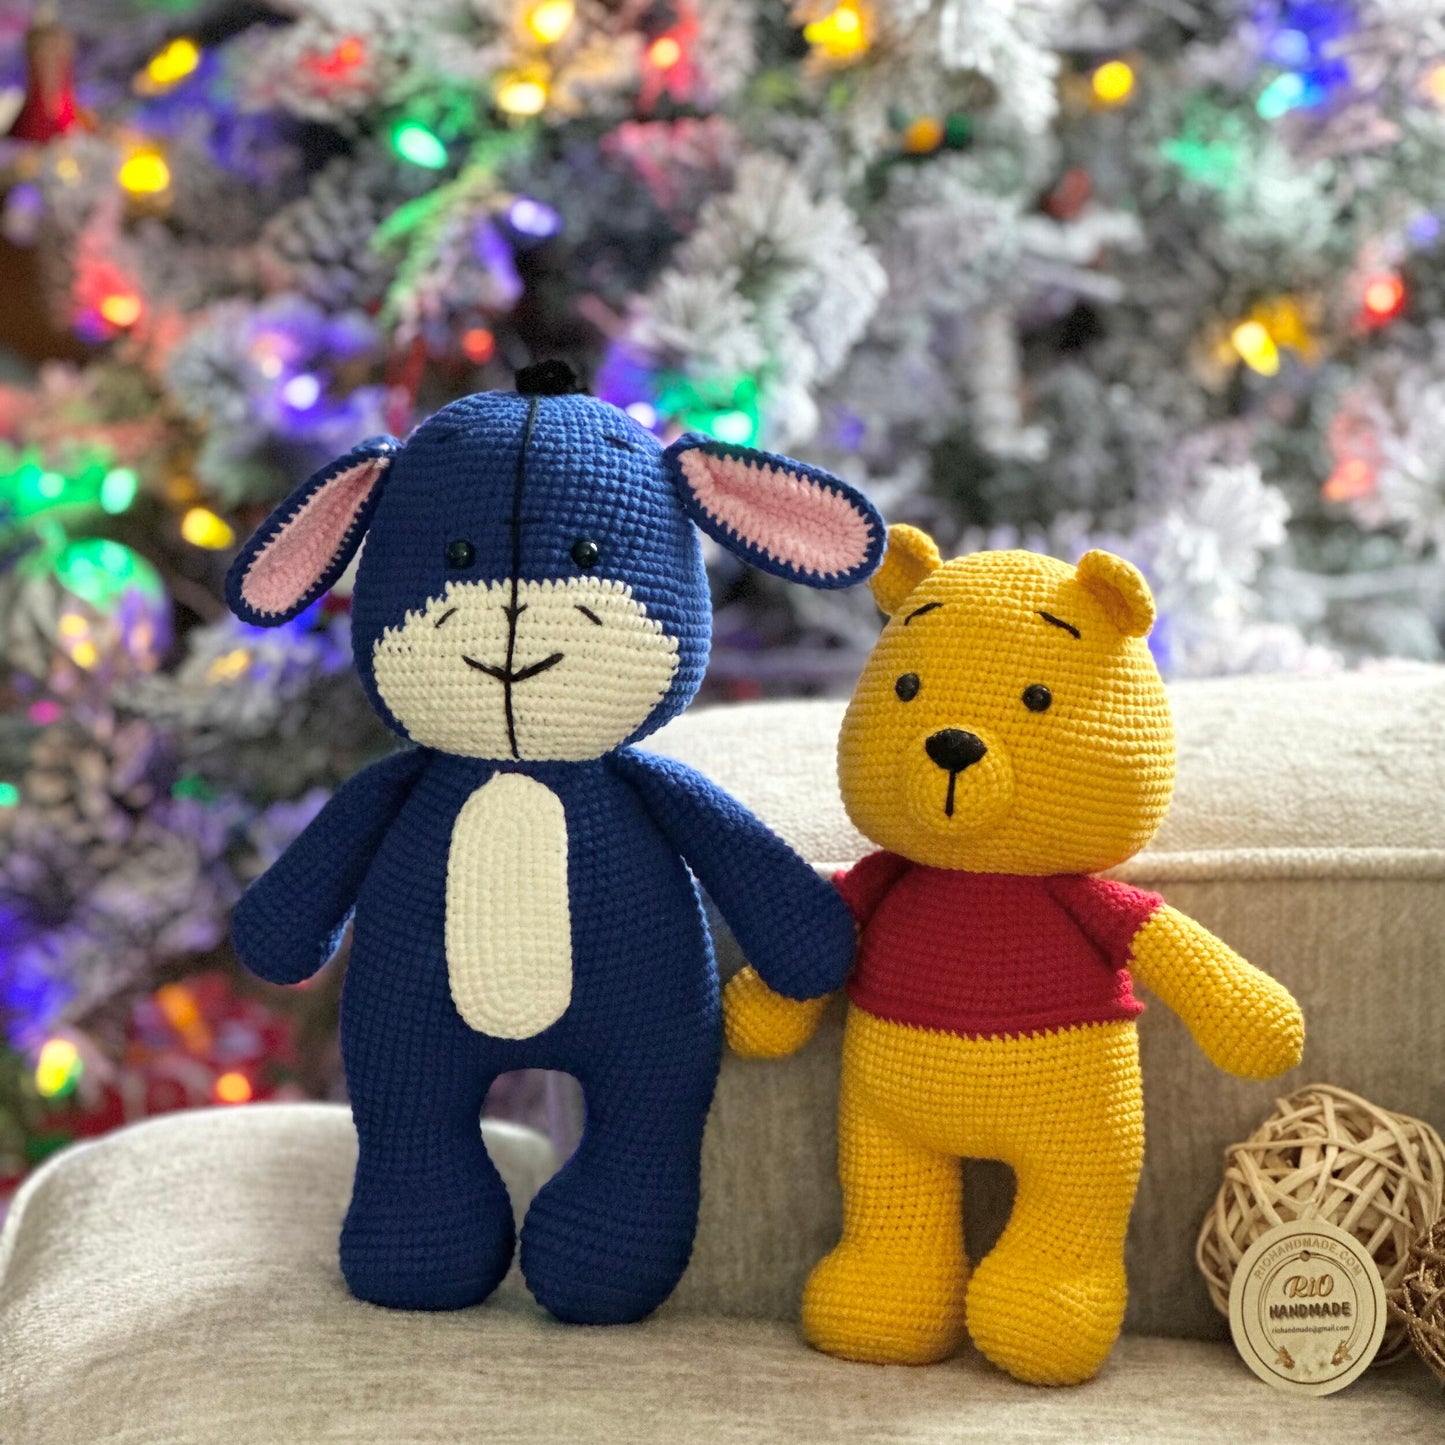 Handmade cotton yarn Bear and friends inspired crochet, amigurumi stuffed, cute, toy for kid, adult hobby,